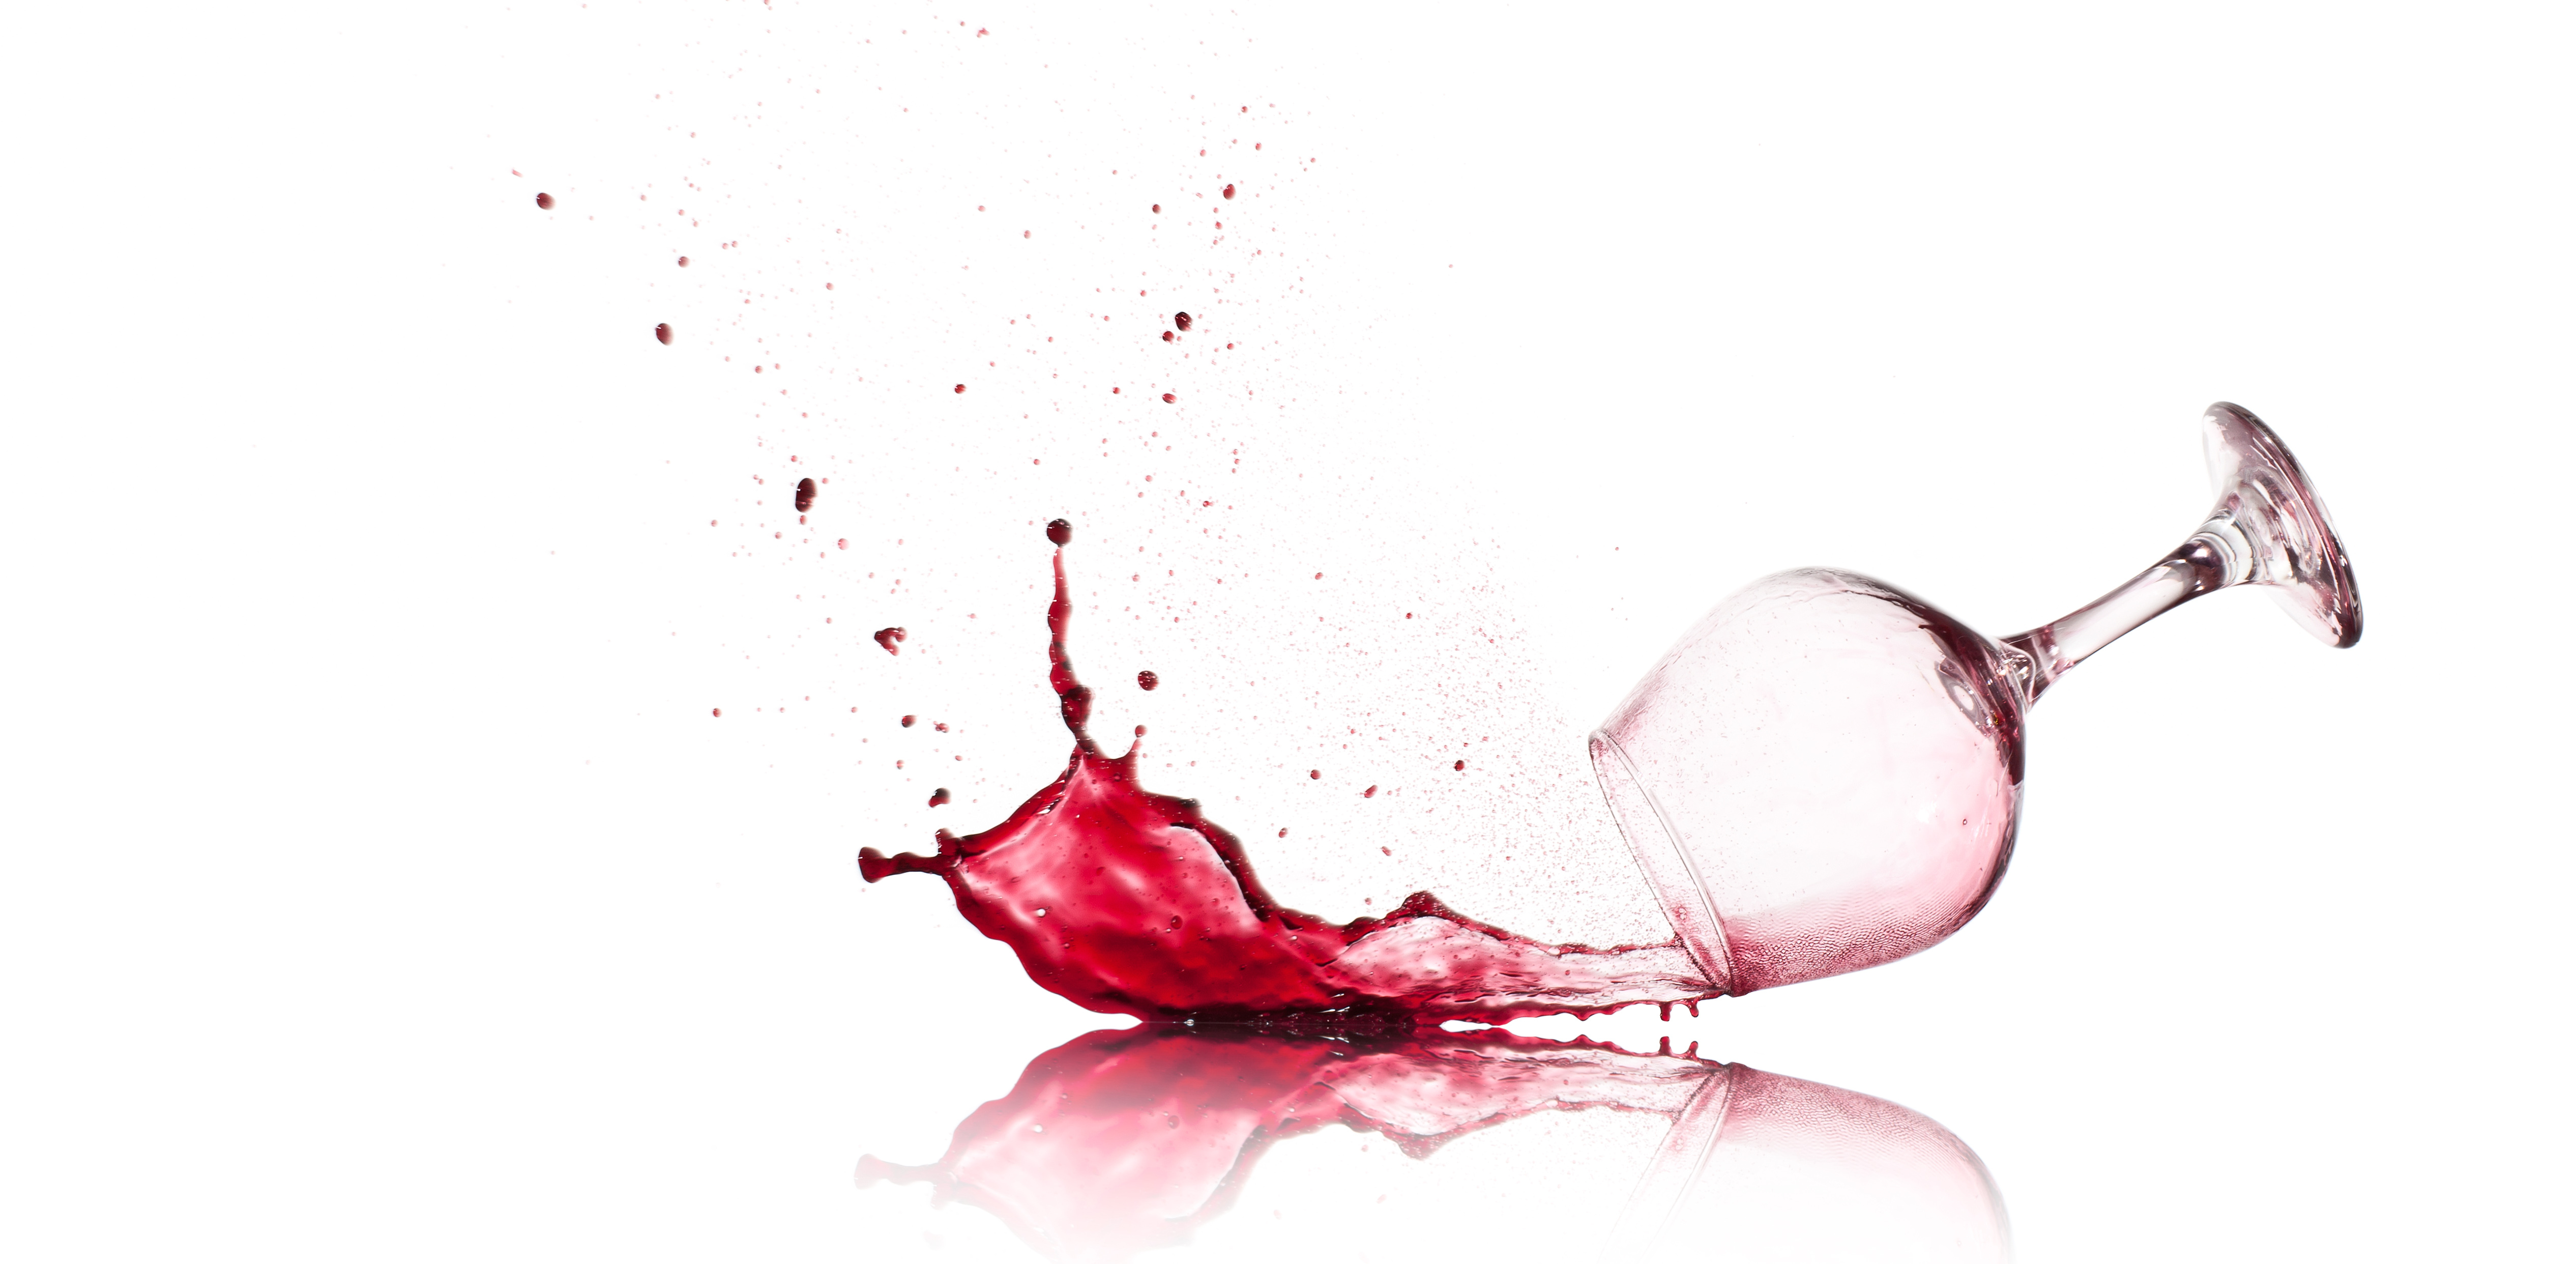 Spilled Red Wine | mydeposits.co.uk